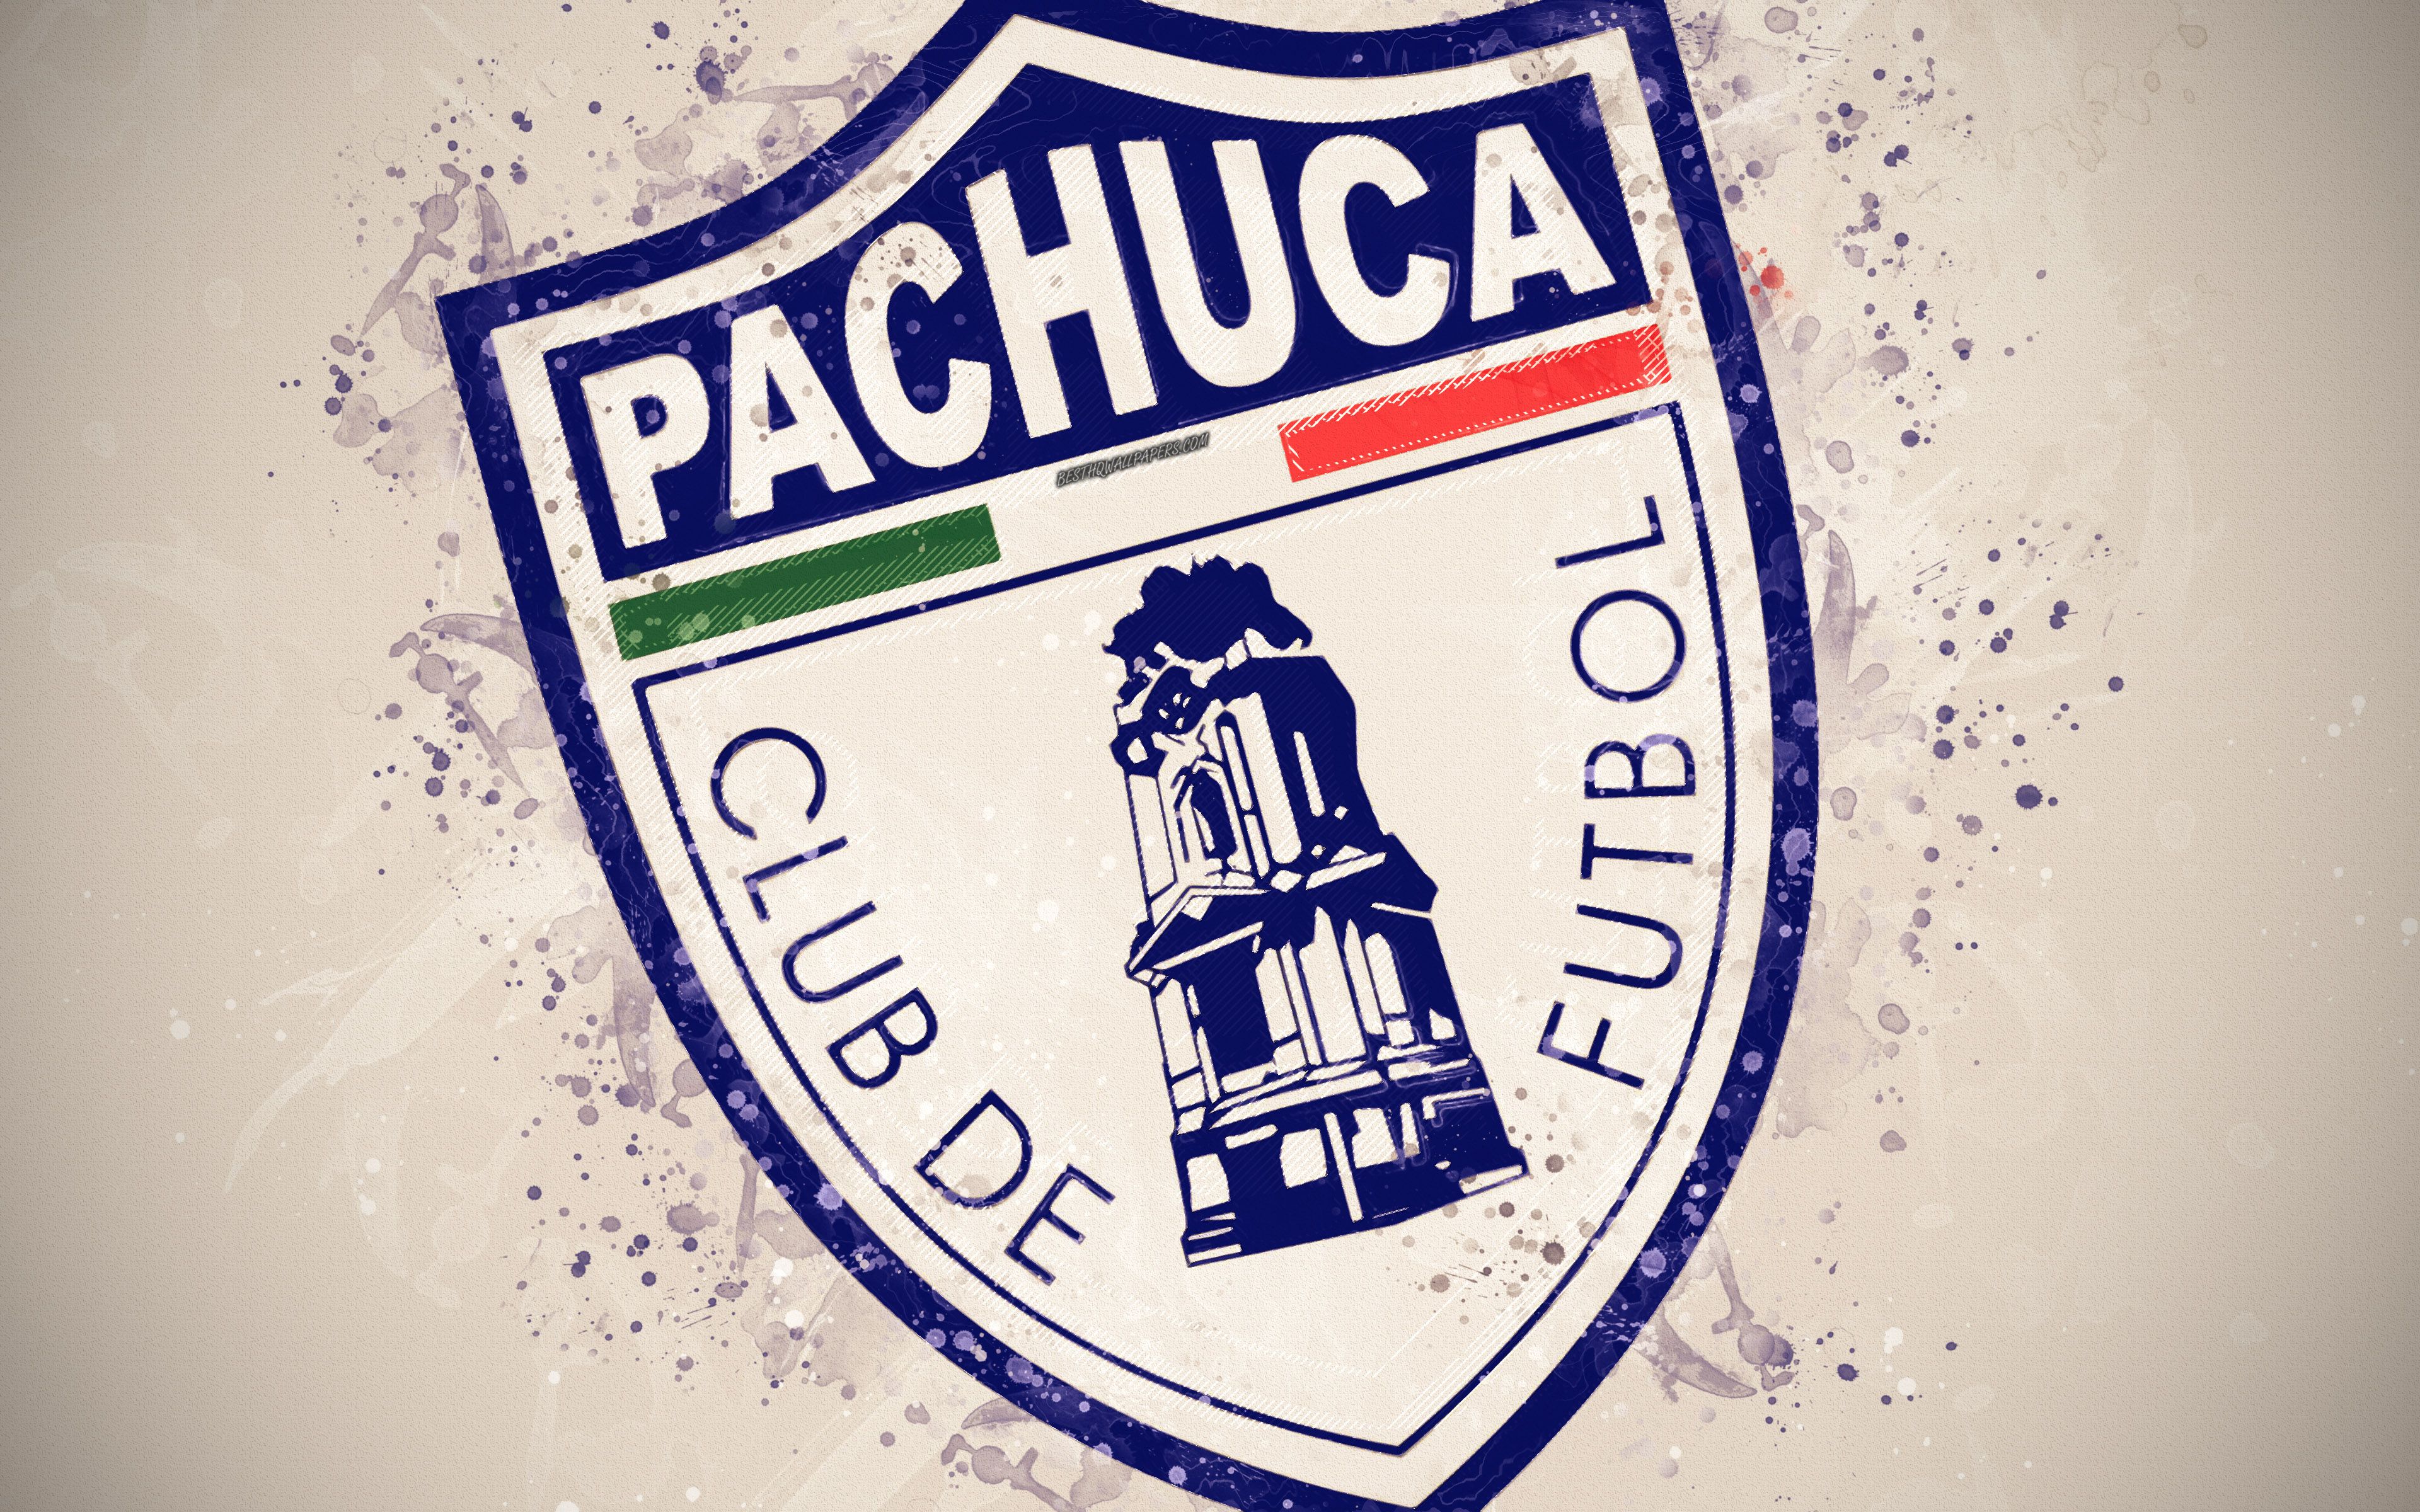 Pachuca Logo Logodix